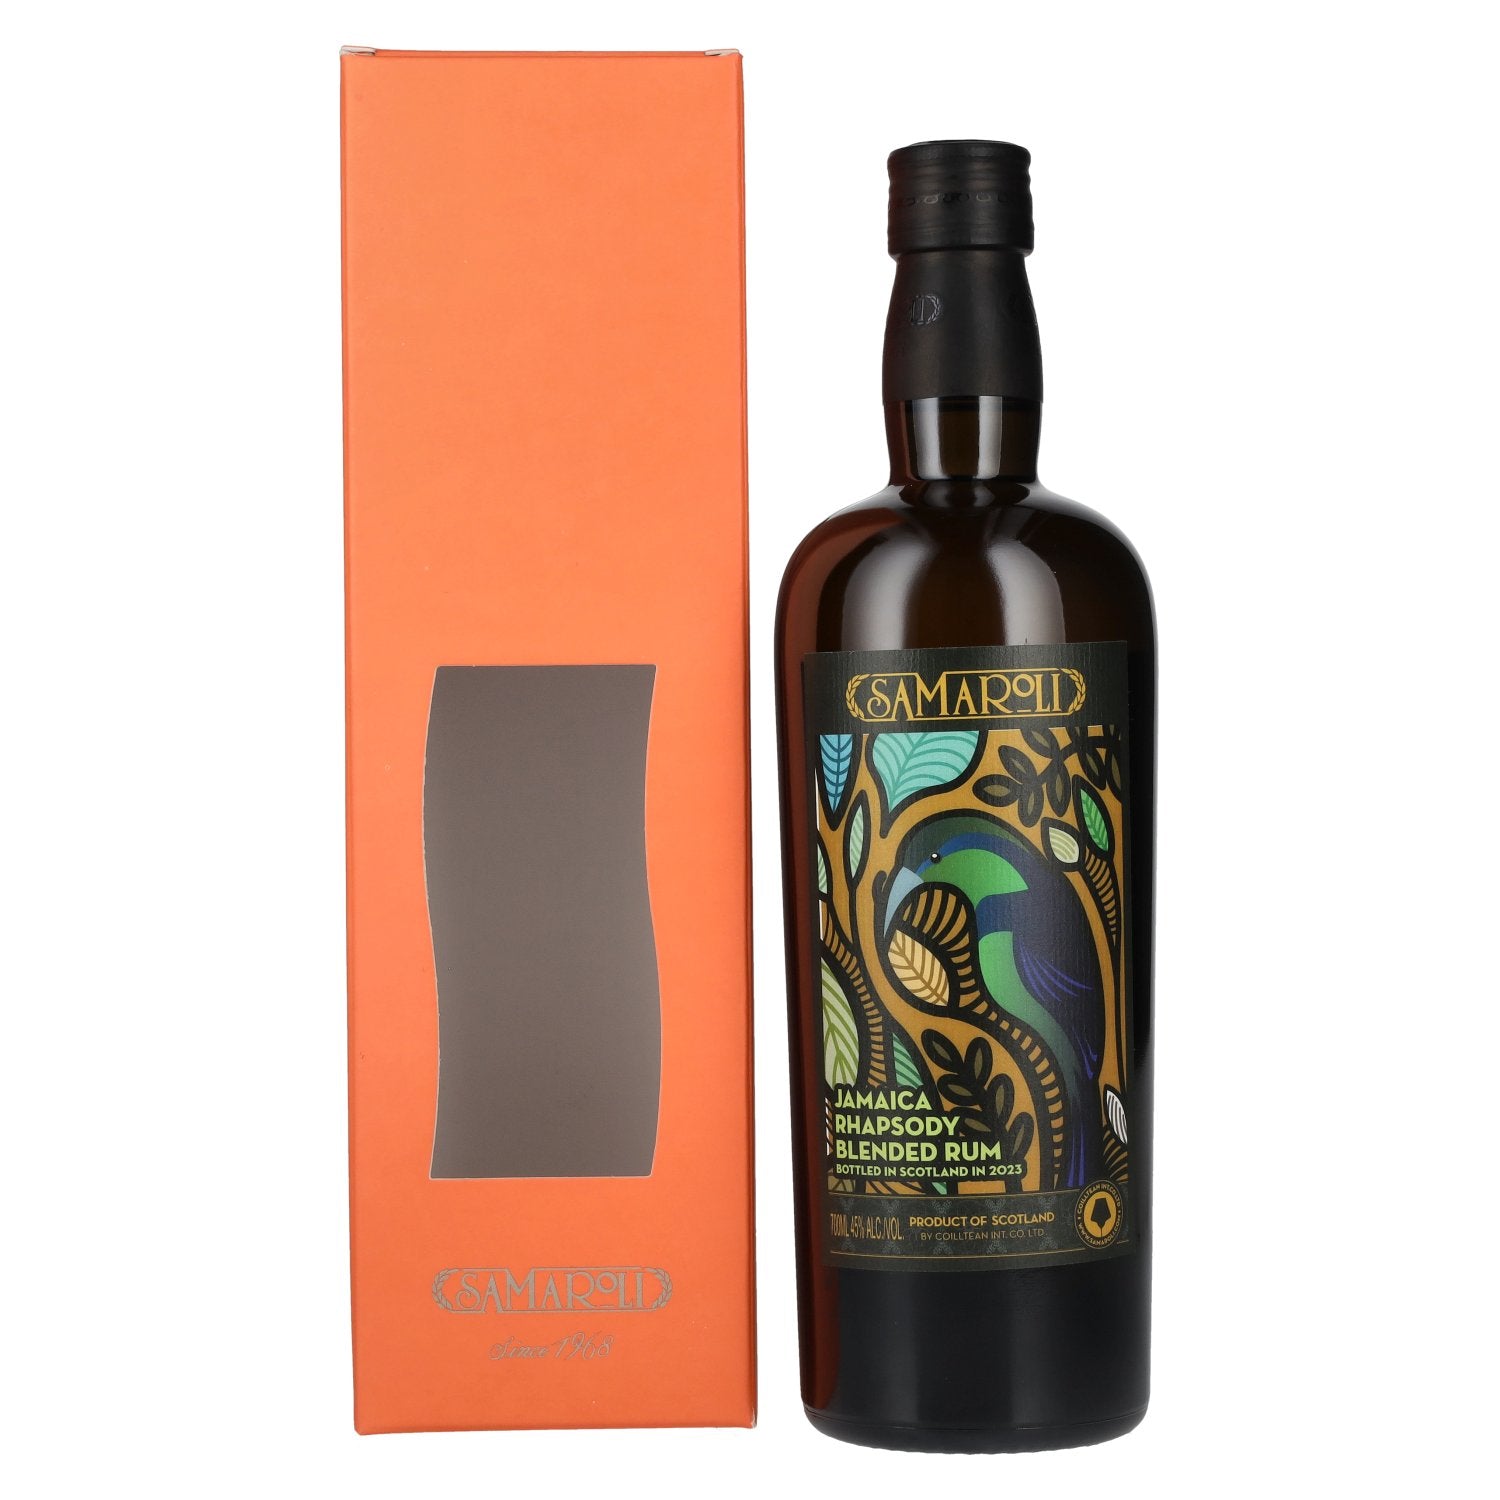 Samaroli Jamaica Rhapsody Blended Rum 2023 45% Vol. 0,7l in Giftbox